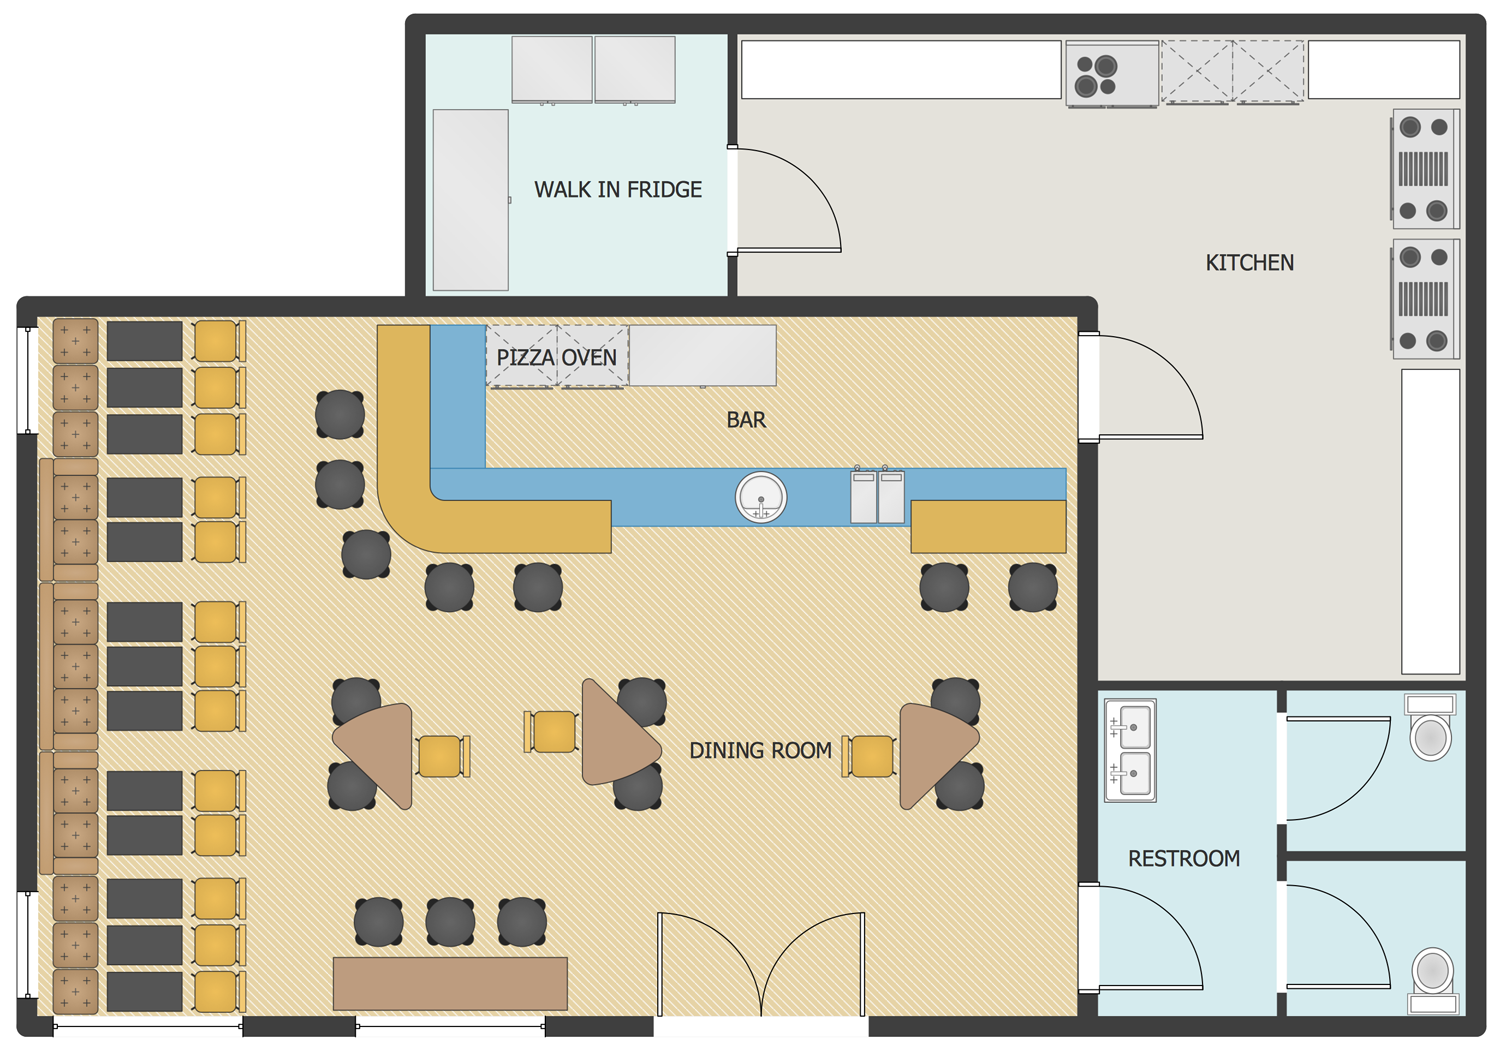 Restaurant Floor Plan Layout Image To U